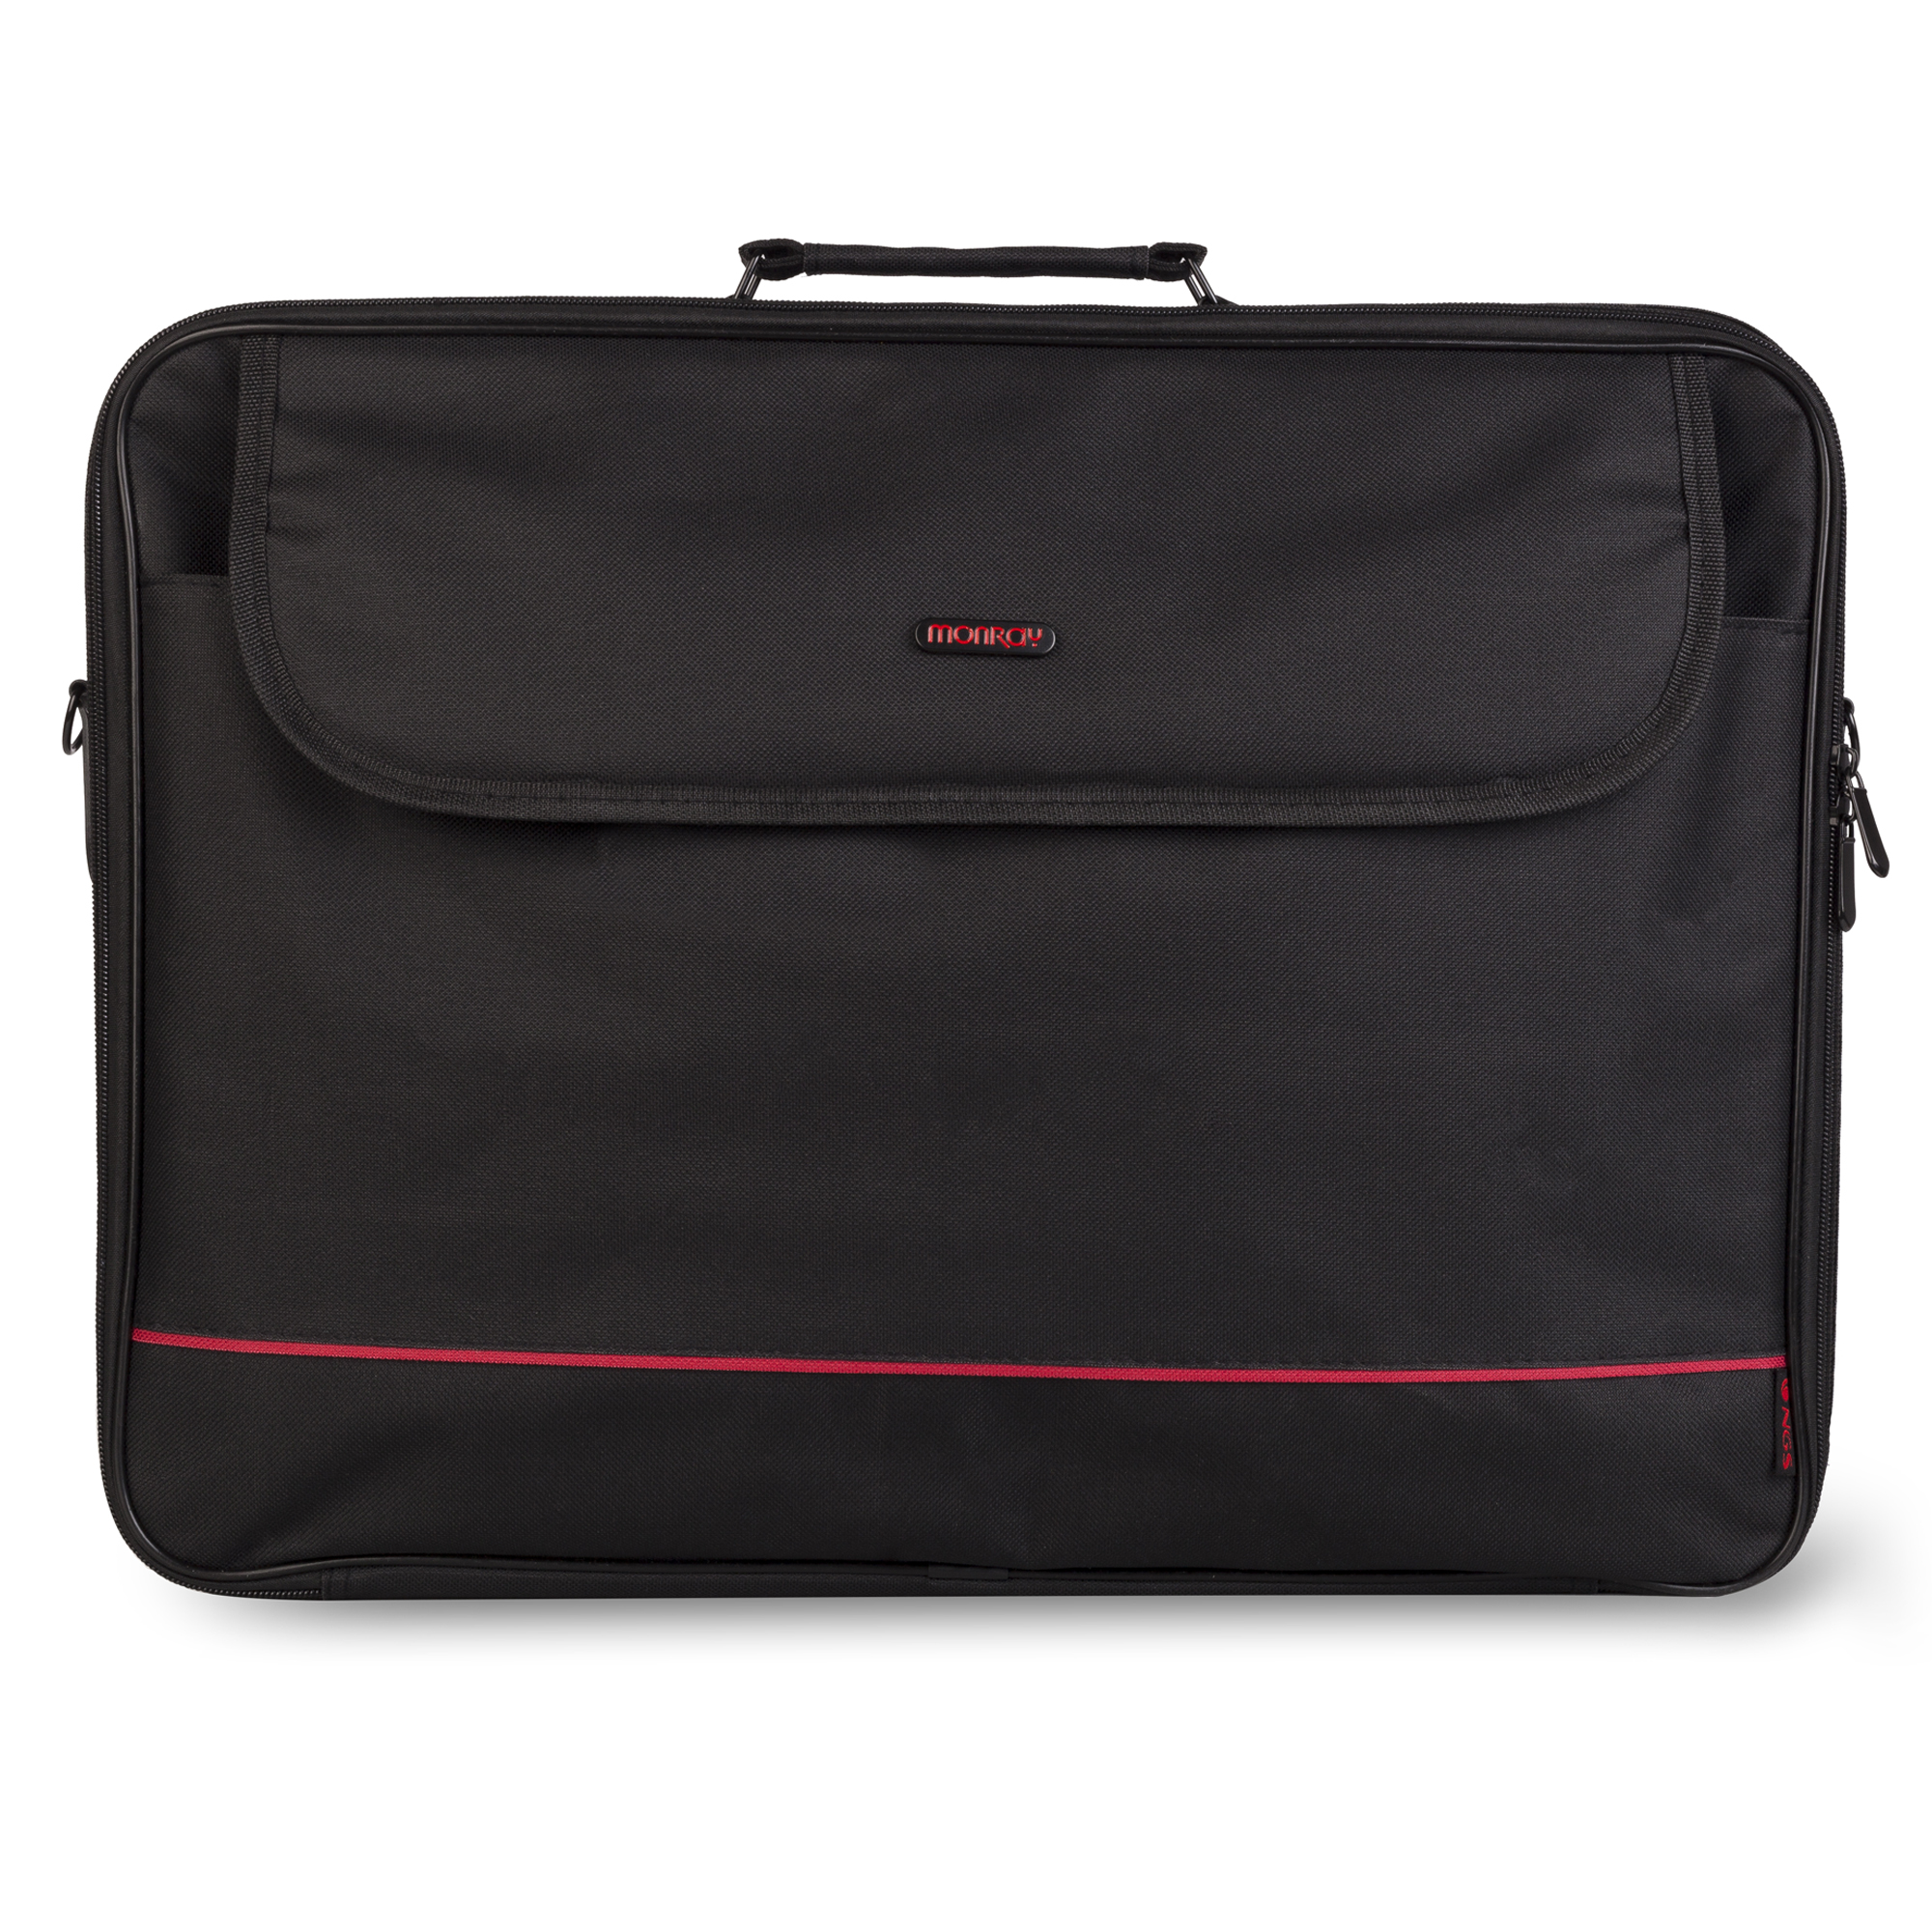 Ngs Passenger Plus maletines para 457 cm 18 negro hasta nylon monray color y detalles rojo. compartimento documentos objetos personales. passanger portatil 16